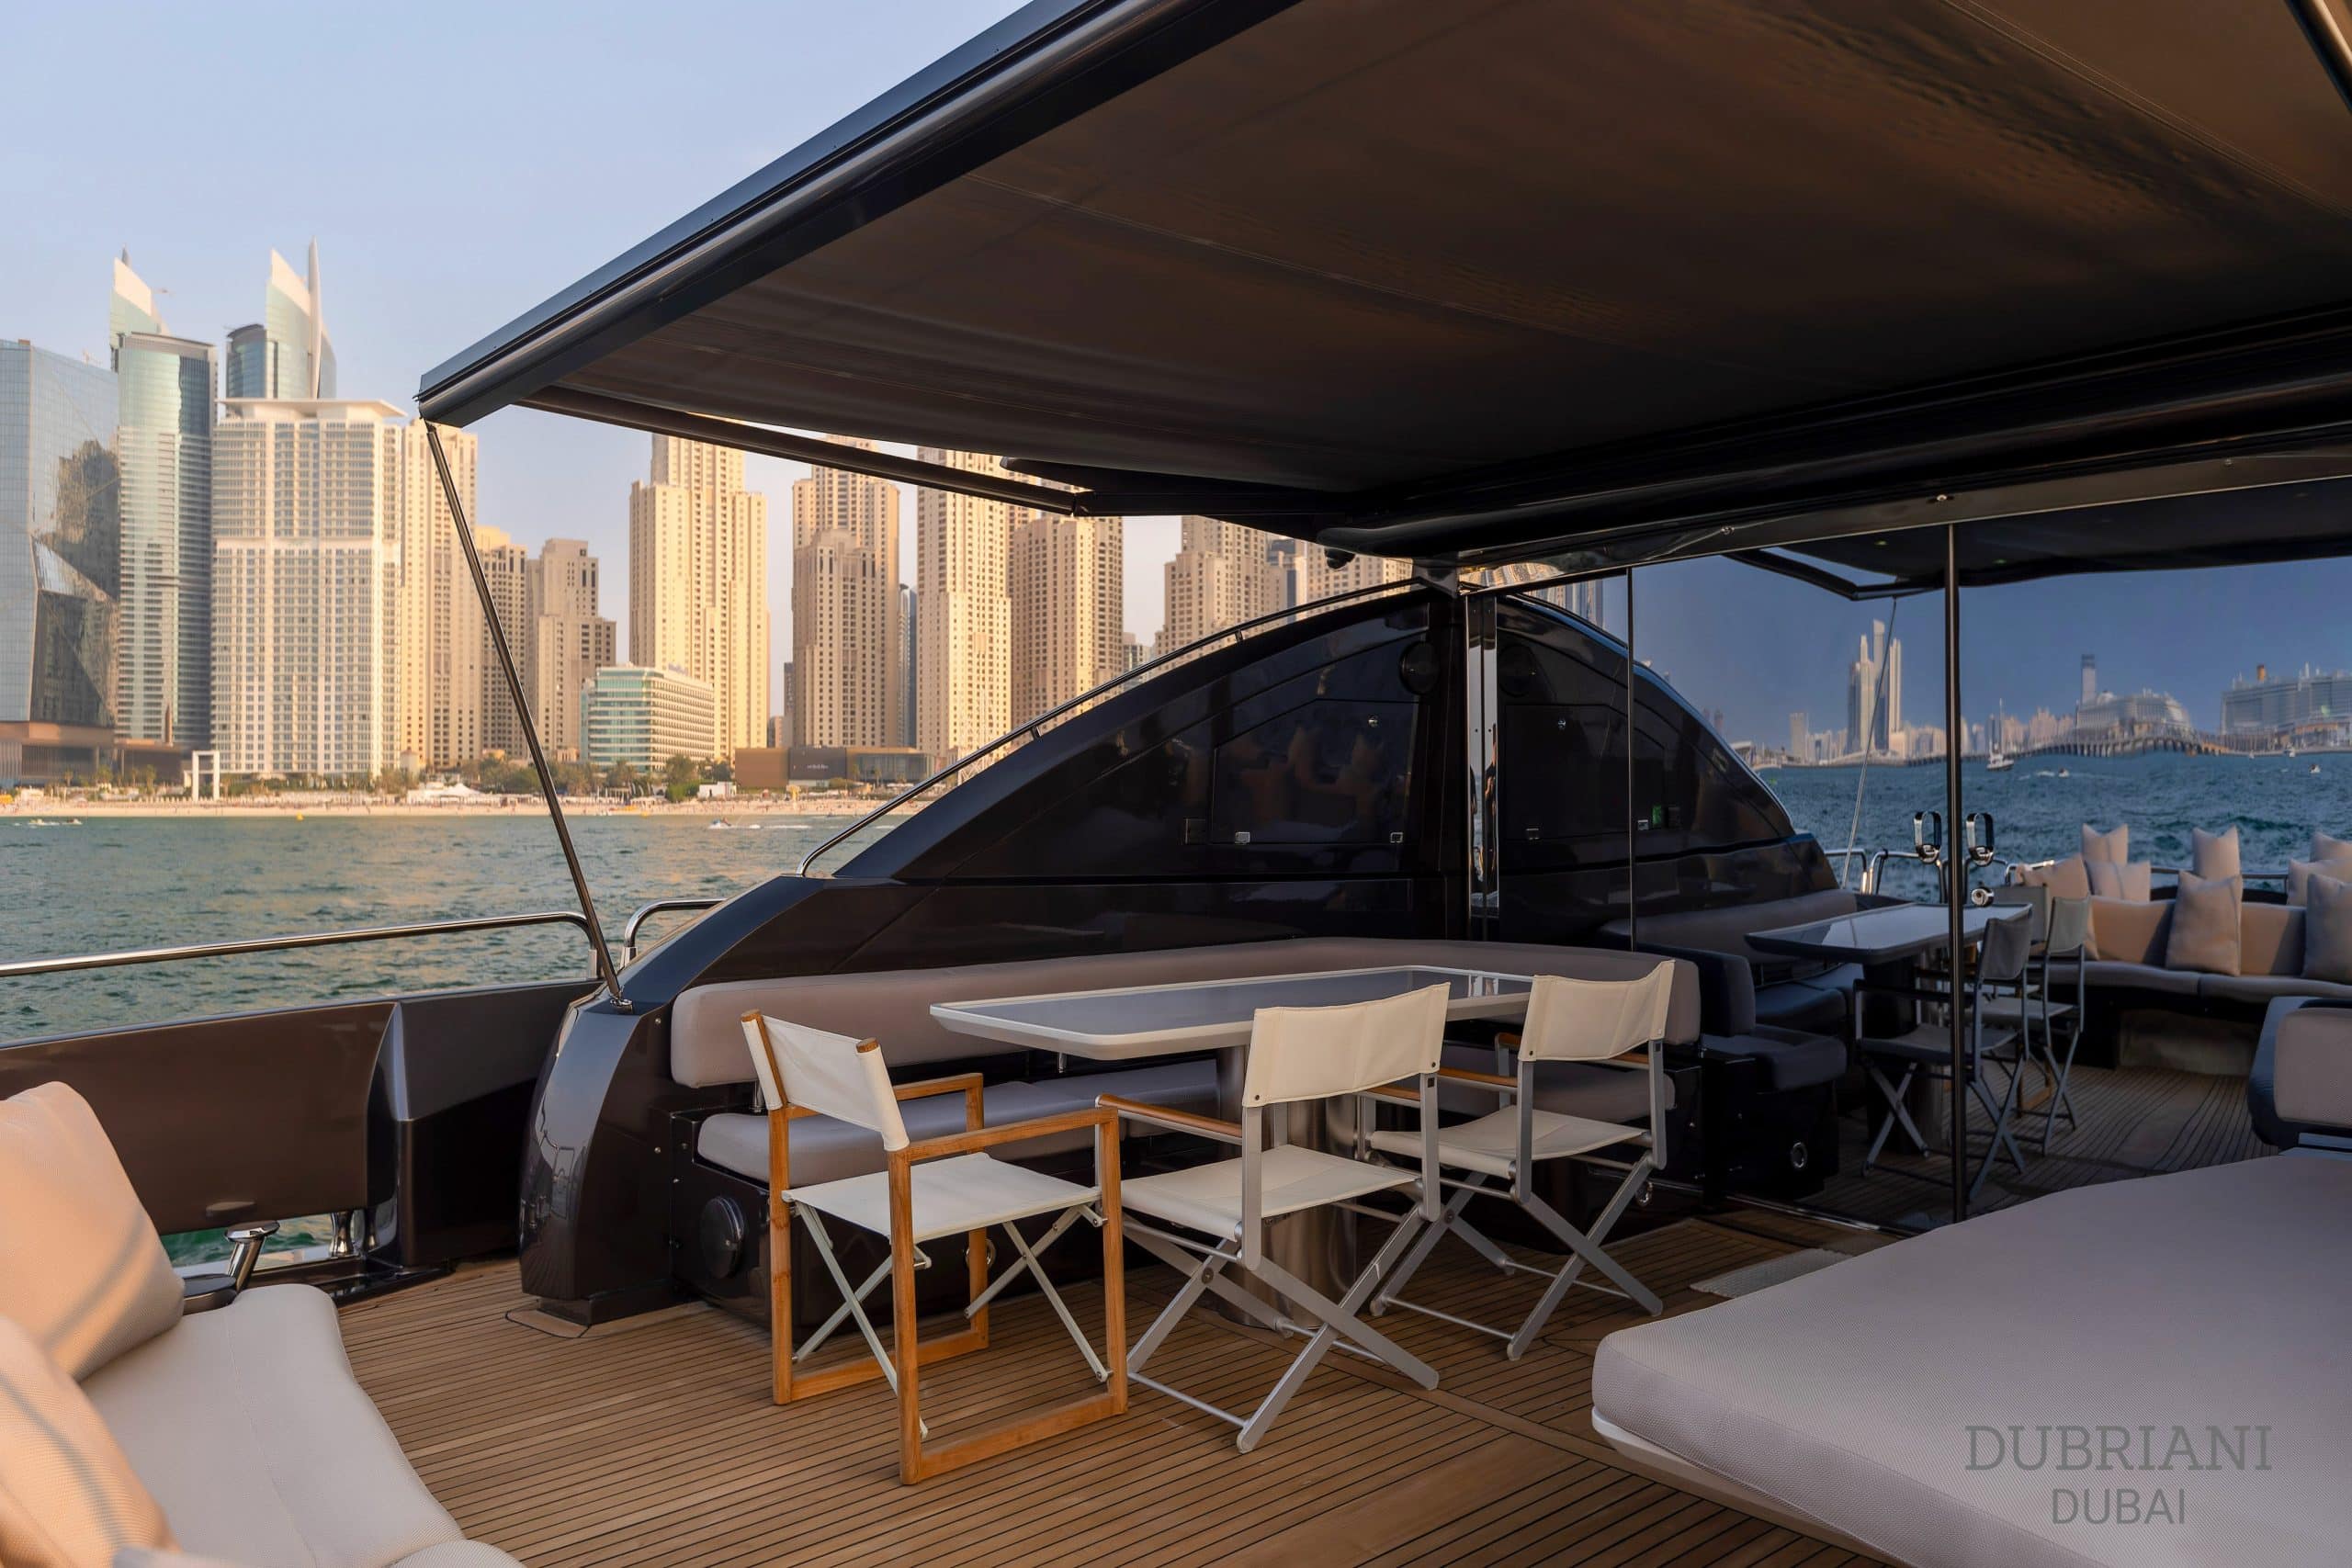 Dubai luxury yacht charter: Sunseeker 108 Predator with jacuzzi amenity.